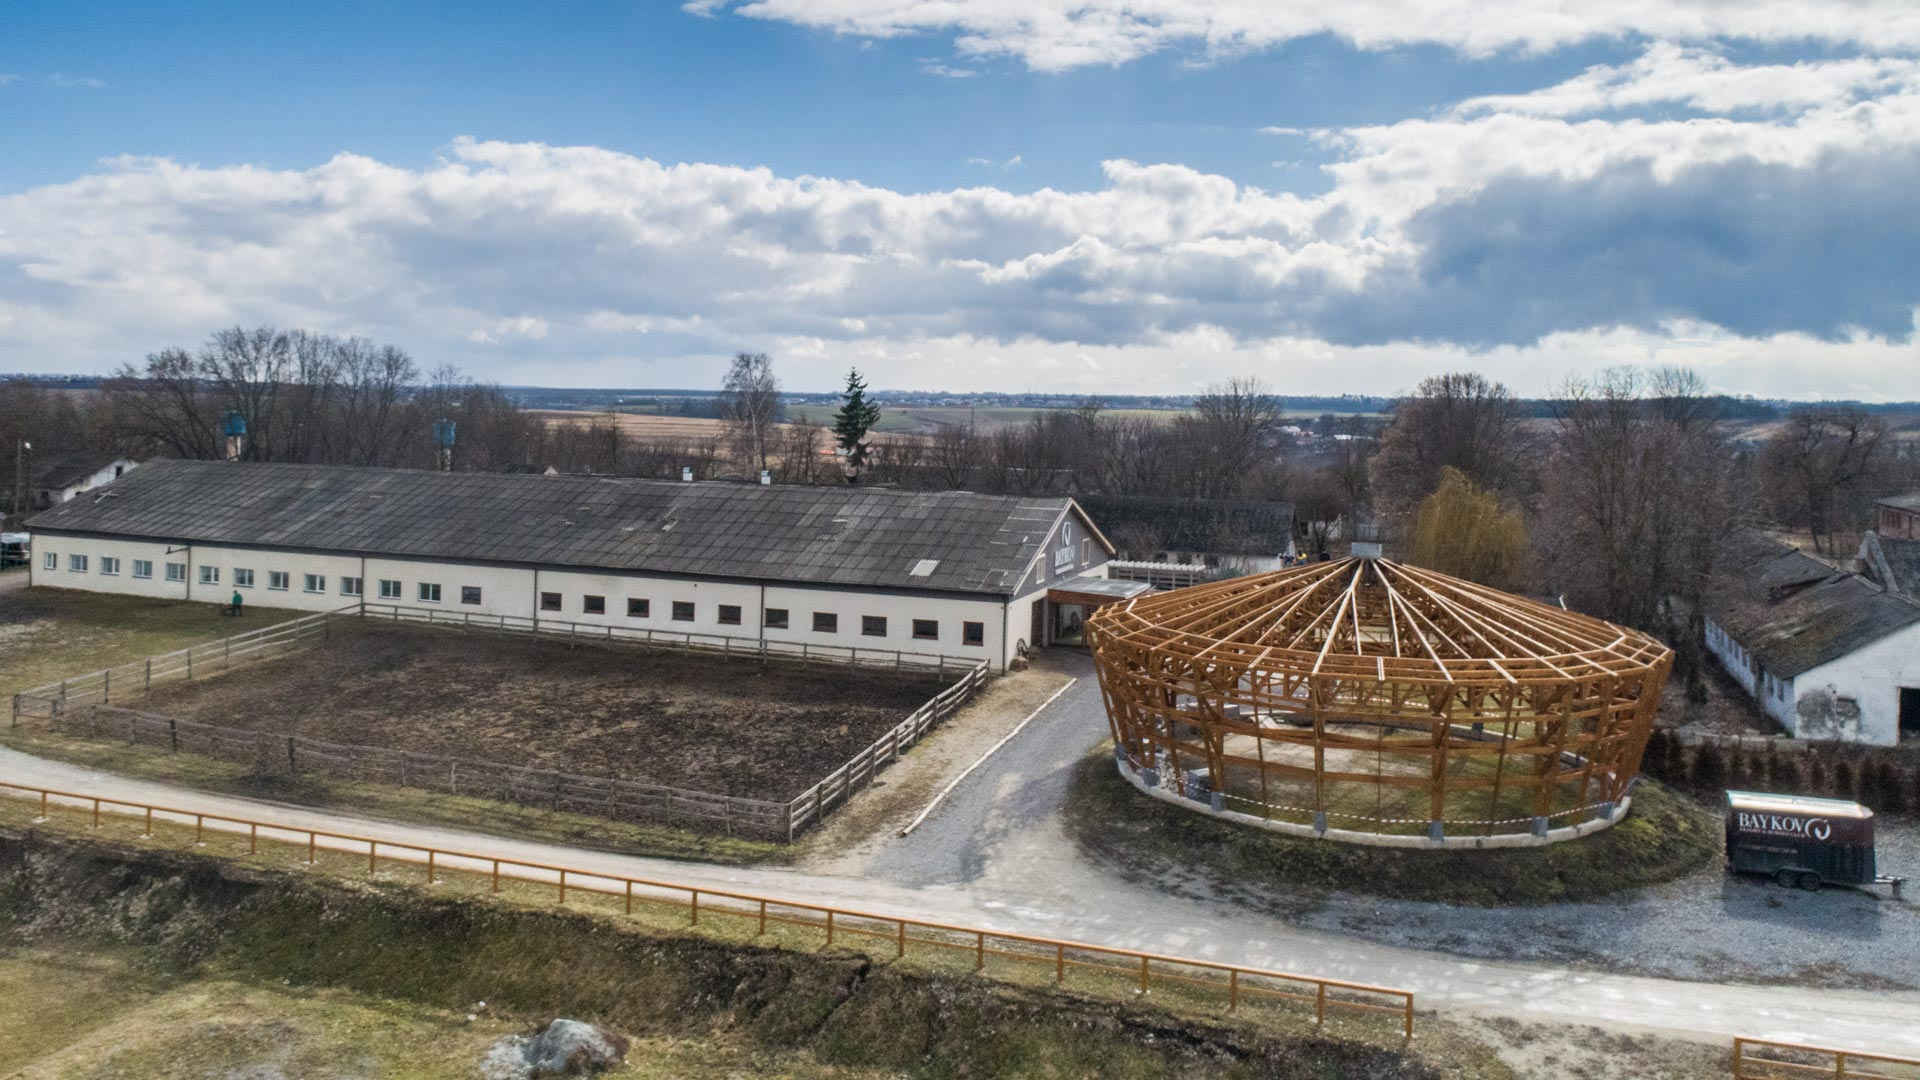 Baikovetska hromada: big enterprise and an observatory